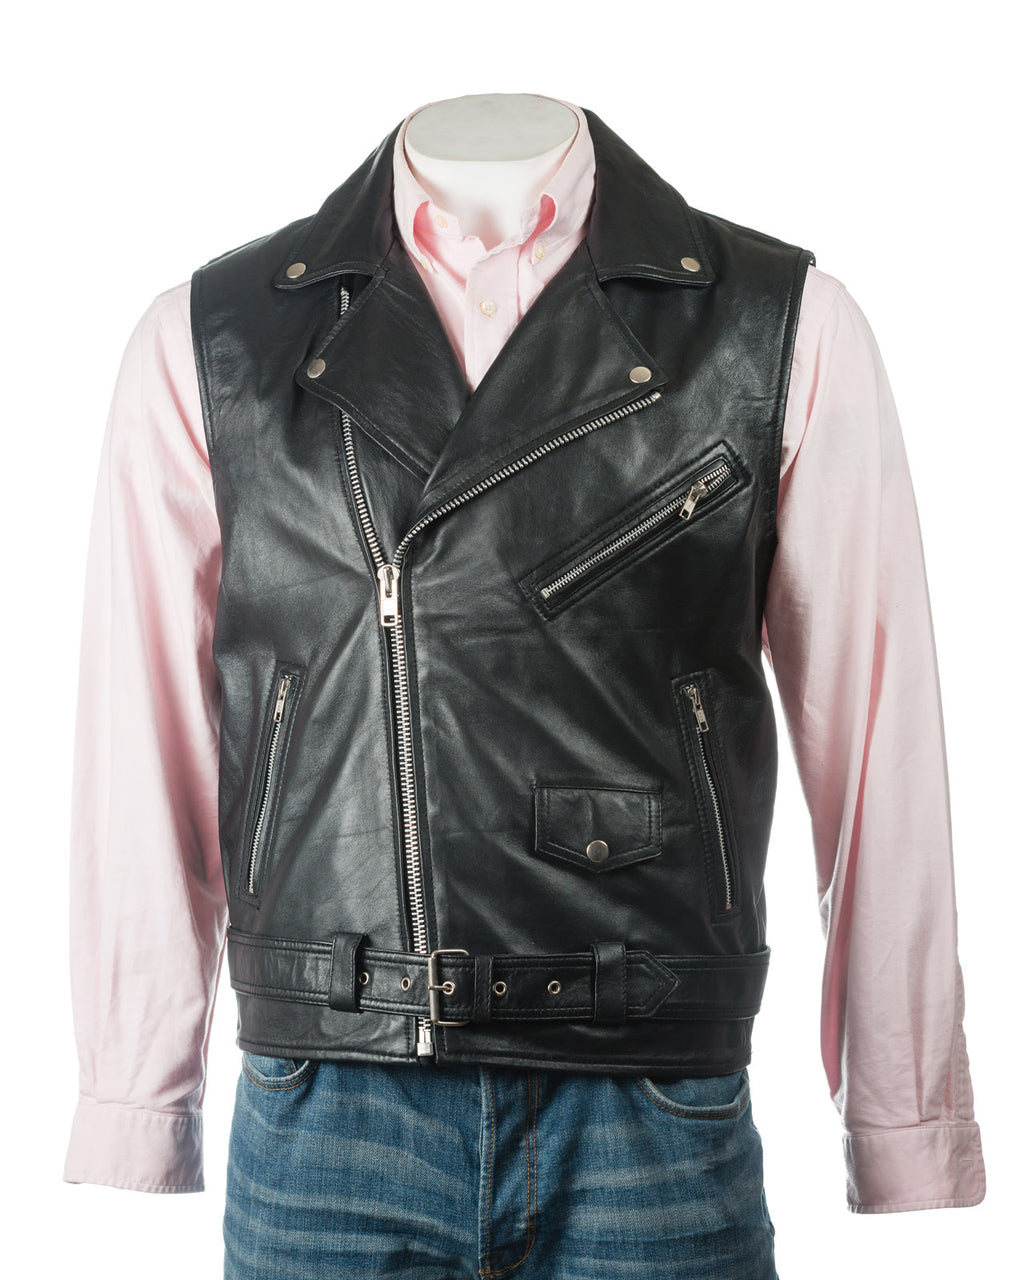 Men’s Black Brando Style Leather Waistcoat: Giglio